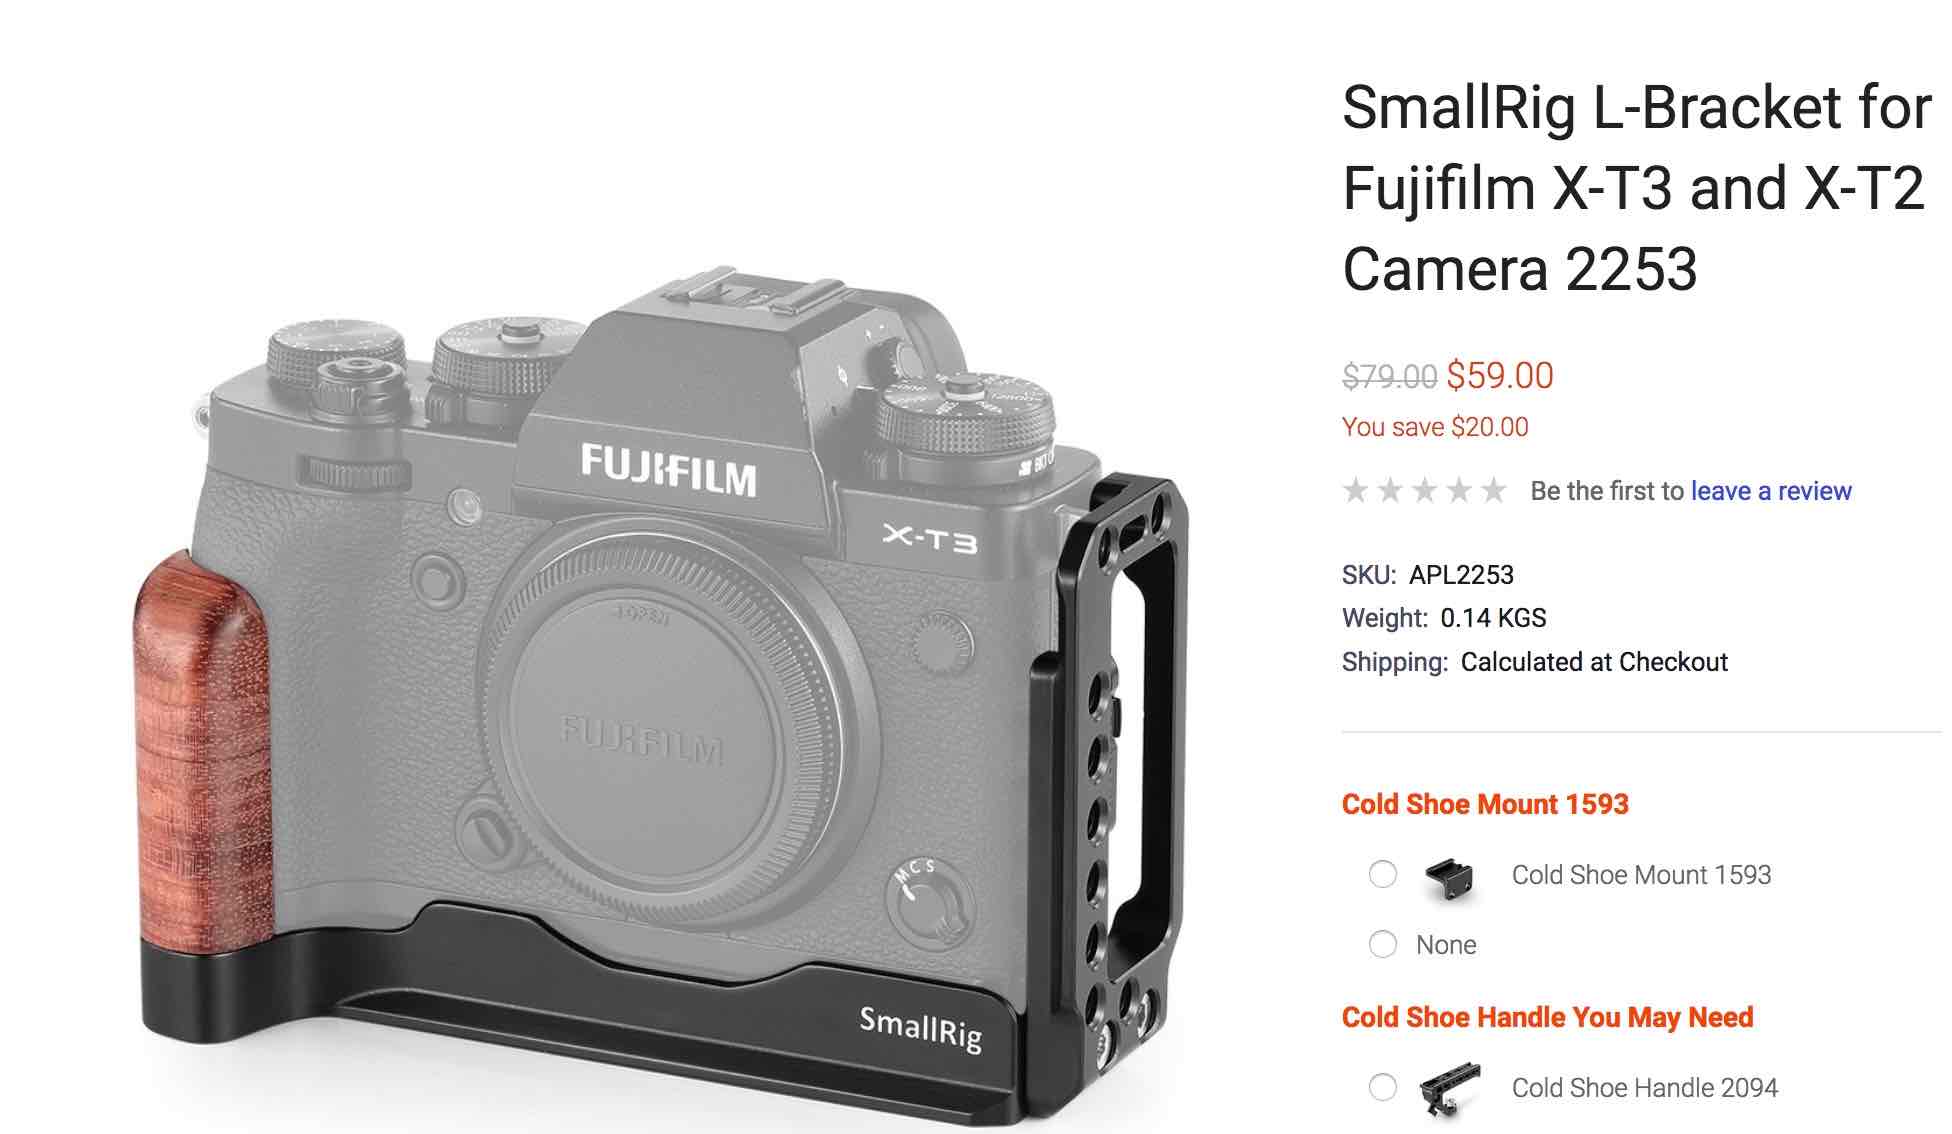 moed draad Onderdrukking SmallRig L-Bracket for Fujifilm X-T3 and X-T2 Pre-order Open with $20  Discount - Fuji Rumors